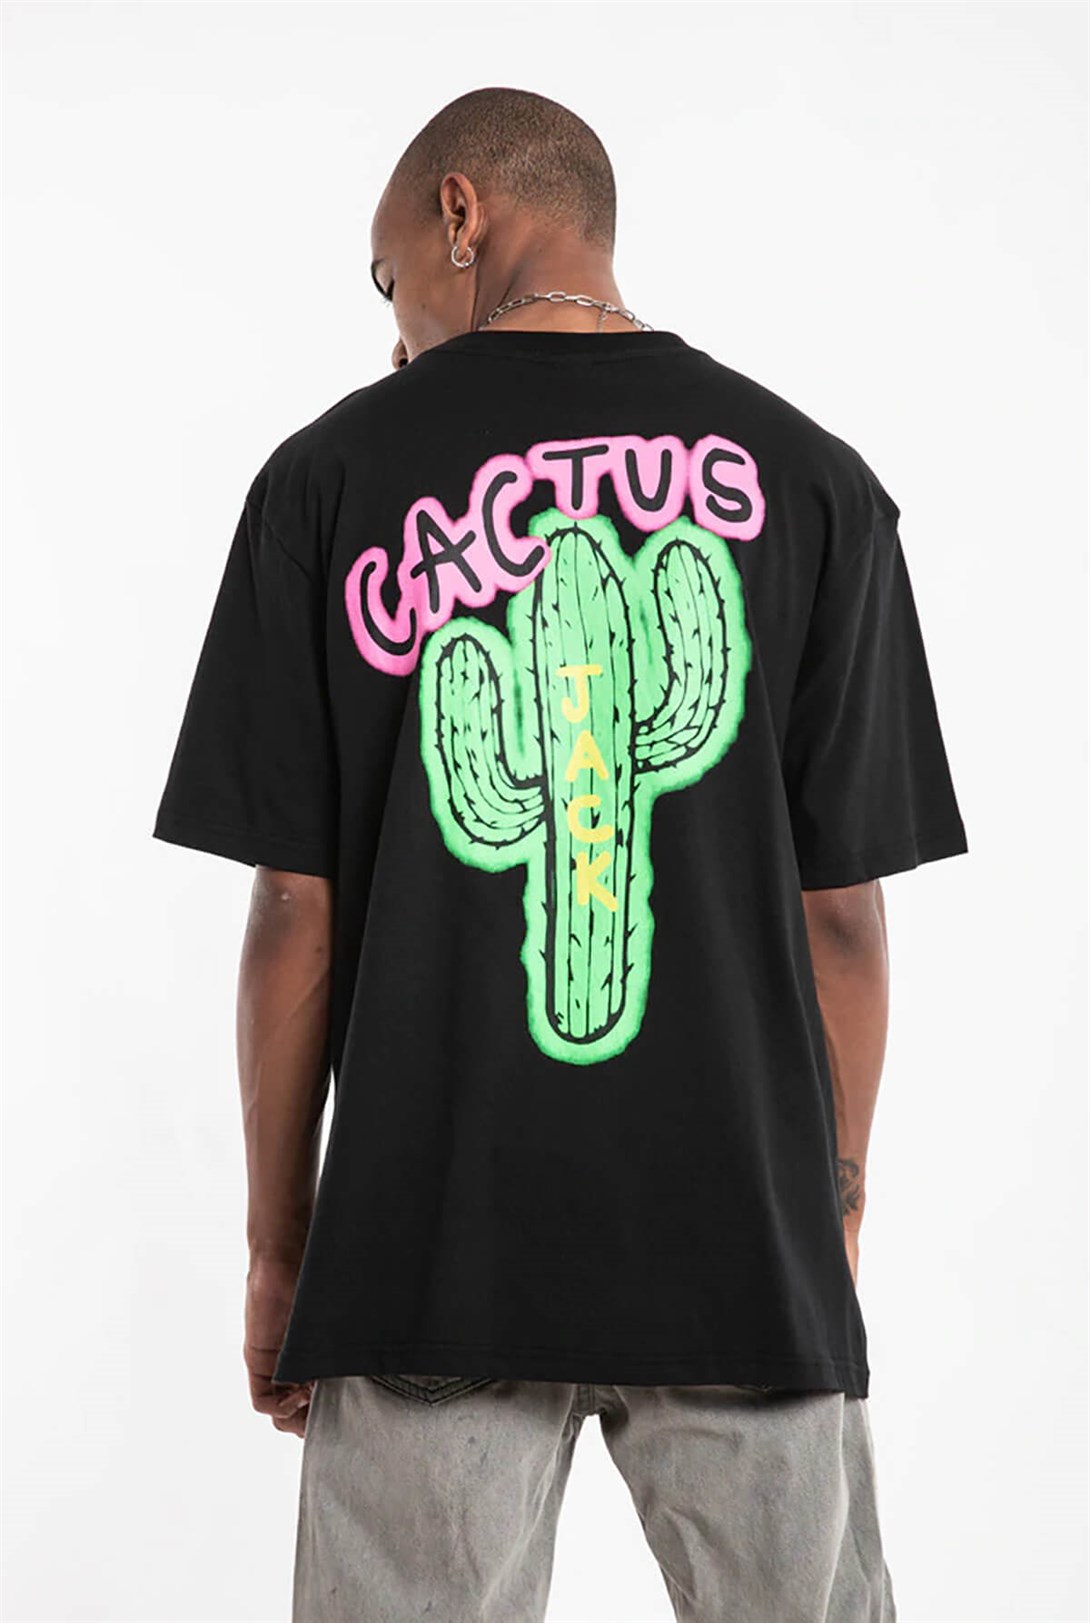 Trendiz Cactus Oversize T-shirt Siyah